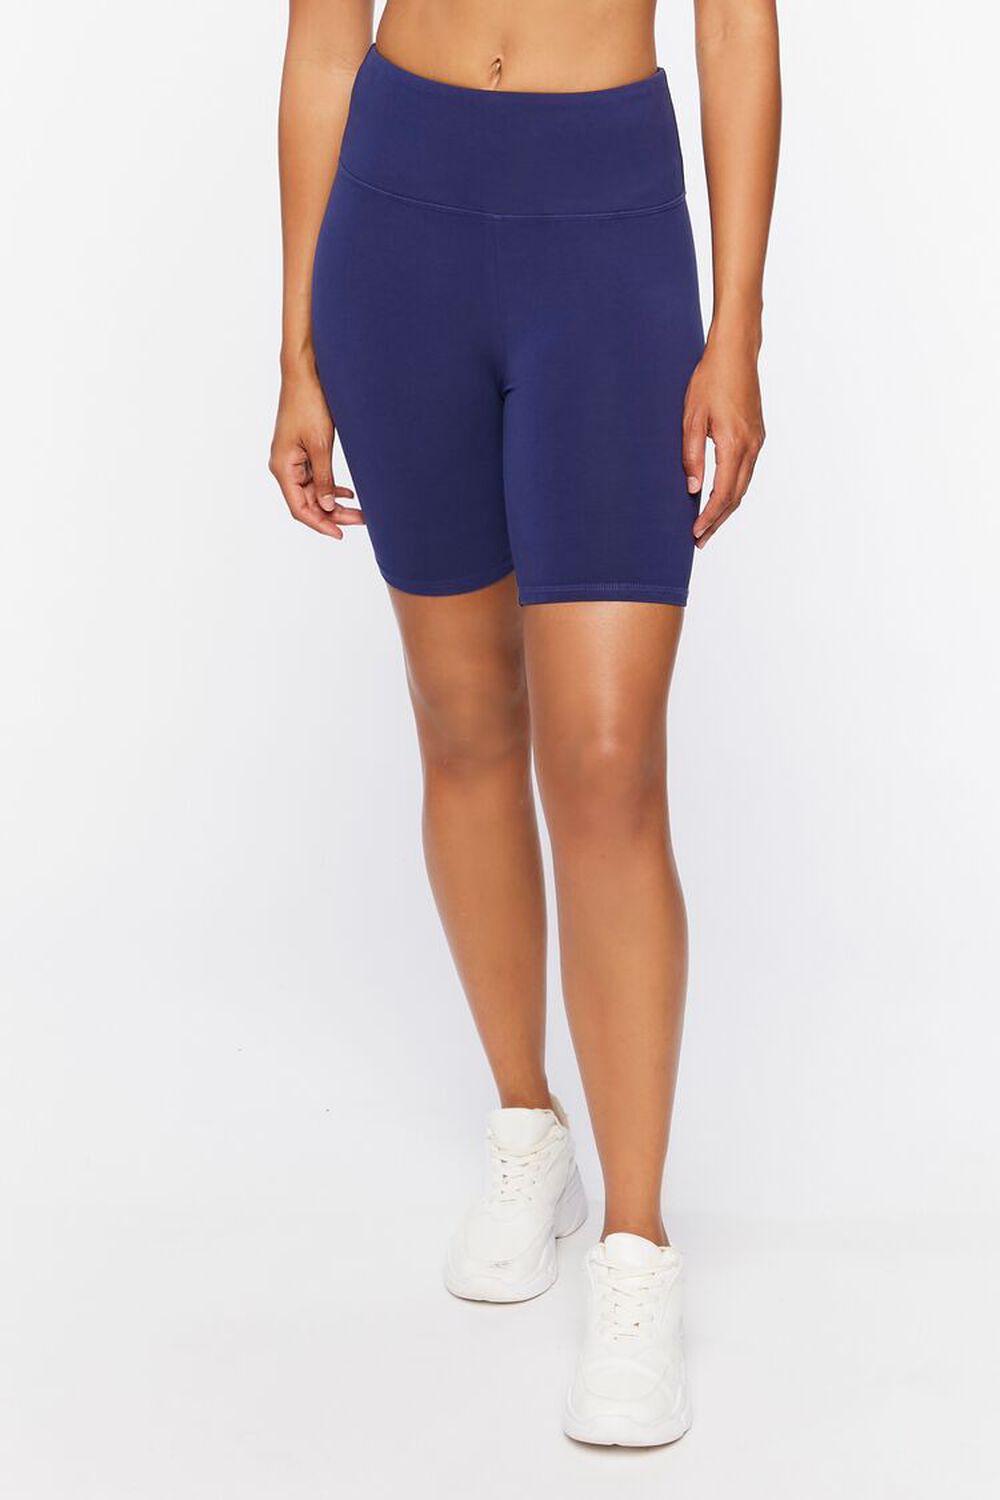 NAVY Active Cotton-Blend Biker Shorts, image 2